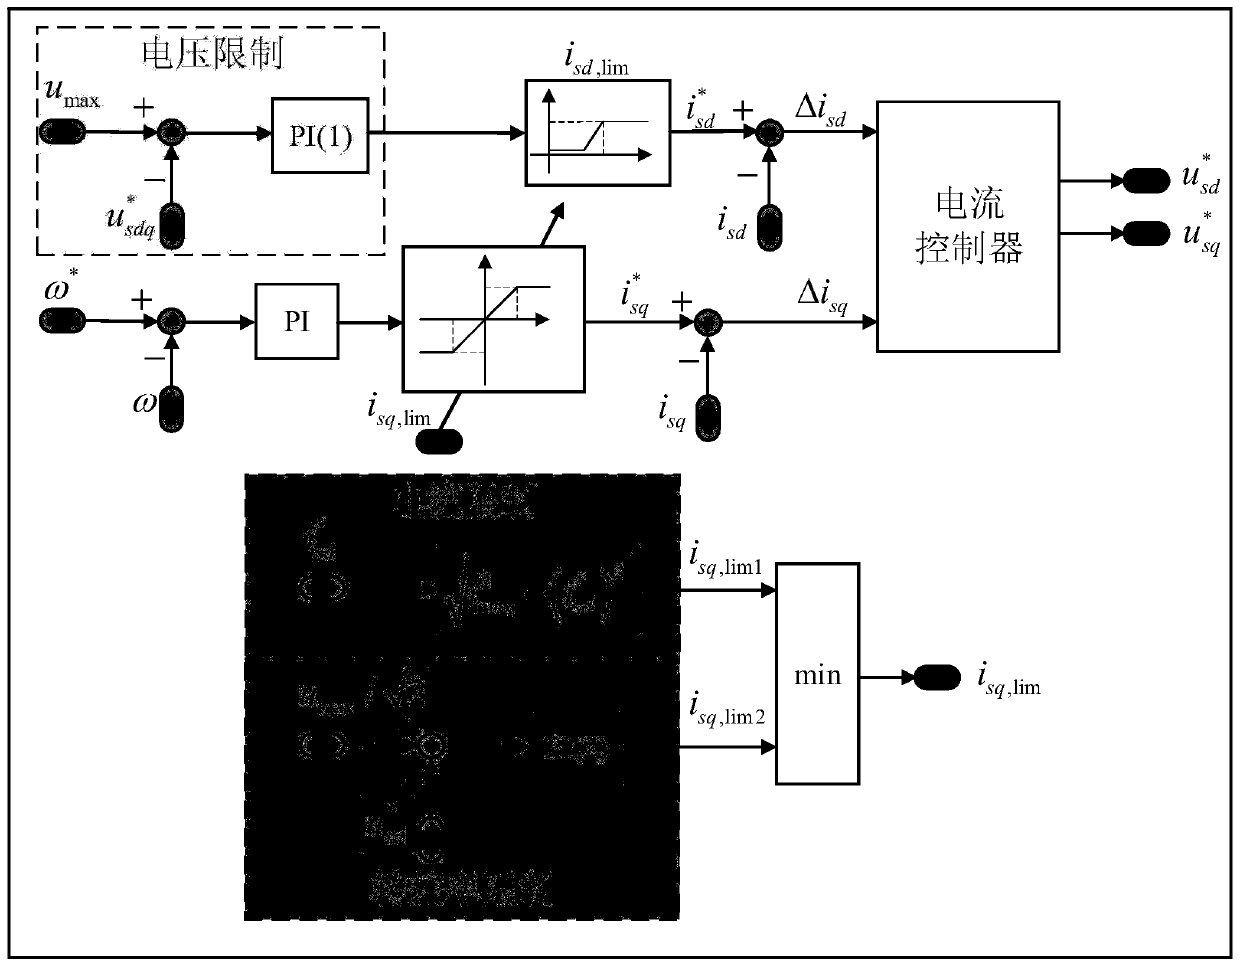 Design method for weak magnetic controller of induction motor based on simplification of voltage loop structure